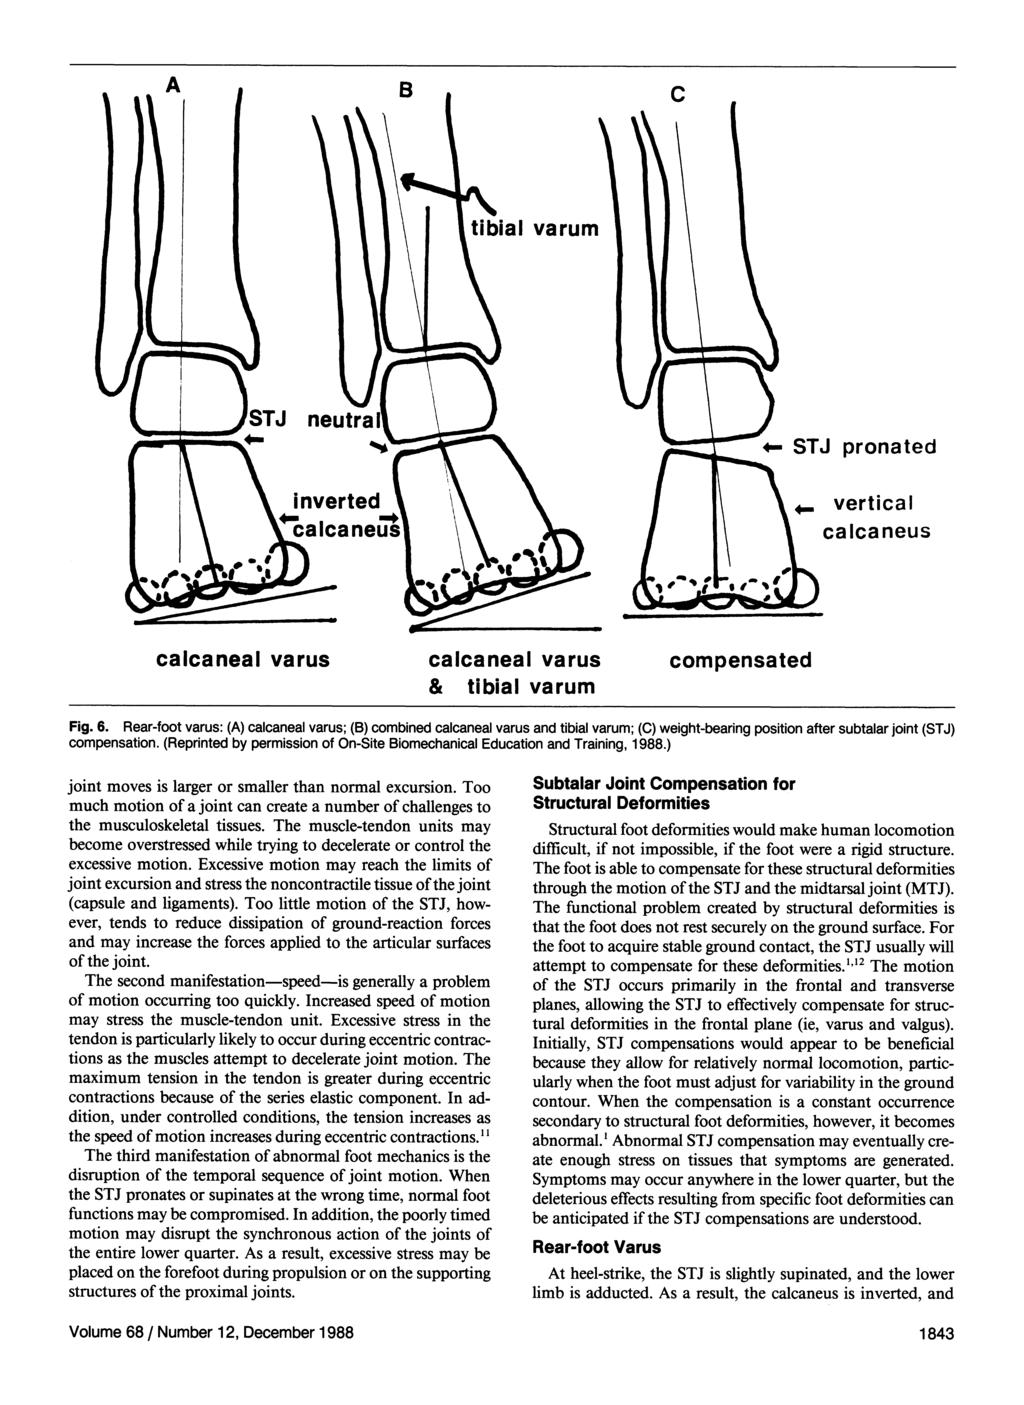 Fig. 6. Rear-foot varus: (A) calcaneal varus; (B) combined calcaneal varus and tibial varum; (C) weight-bearing position after subtalar joint (STJ) compensation.